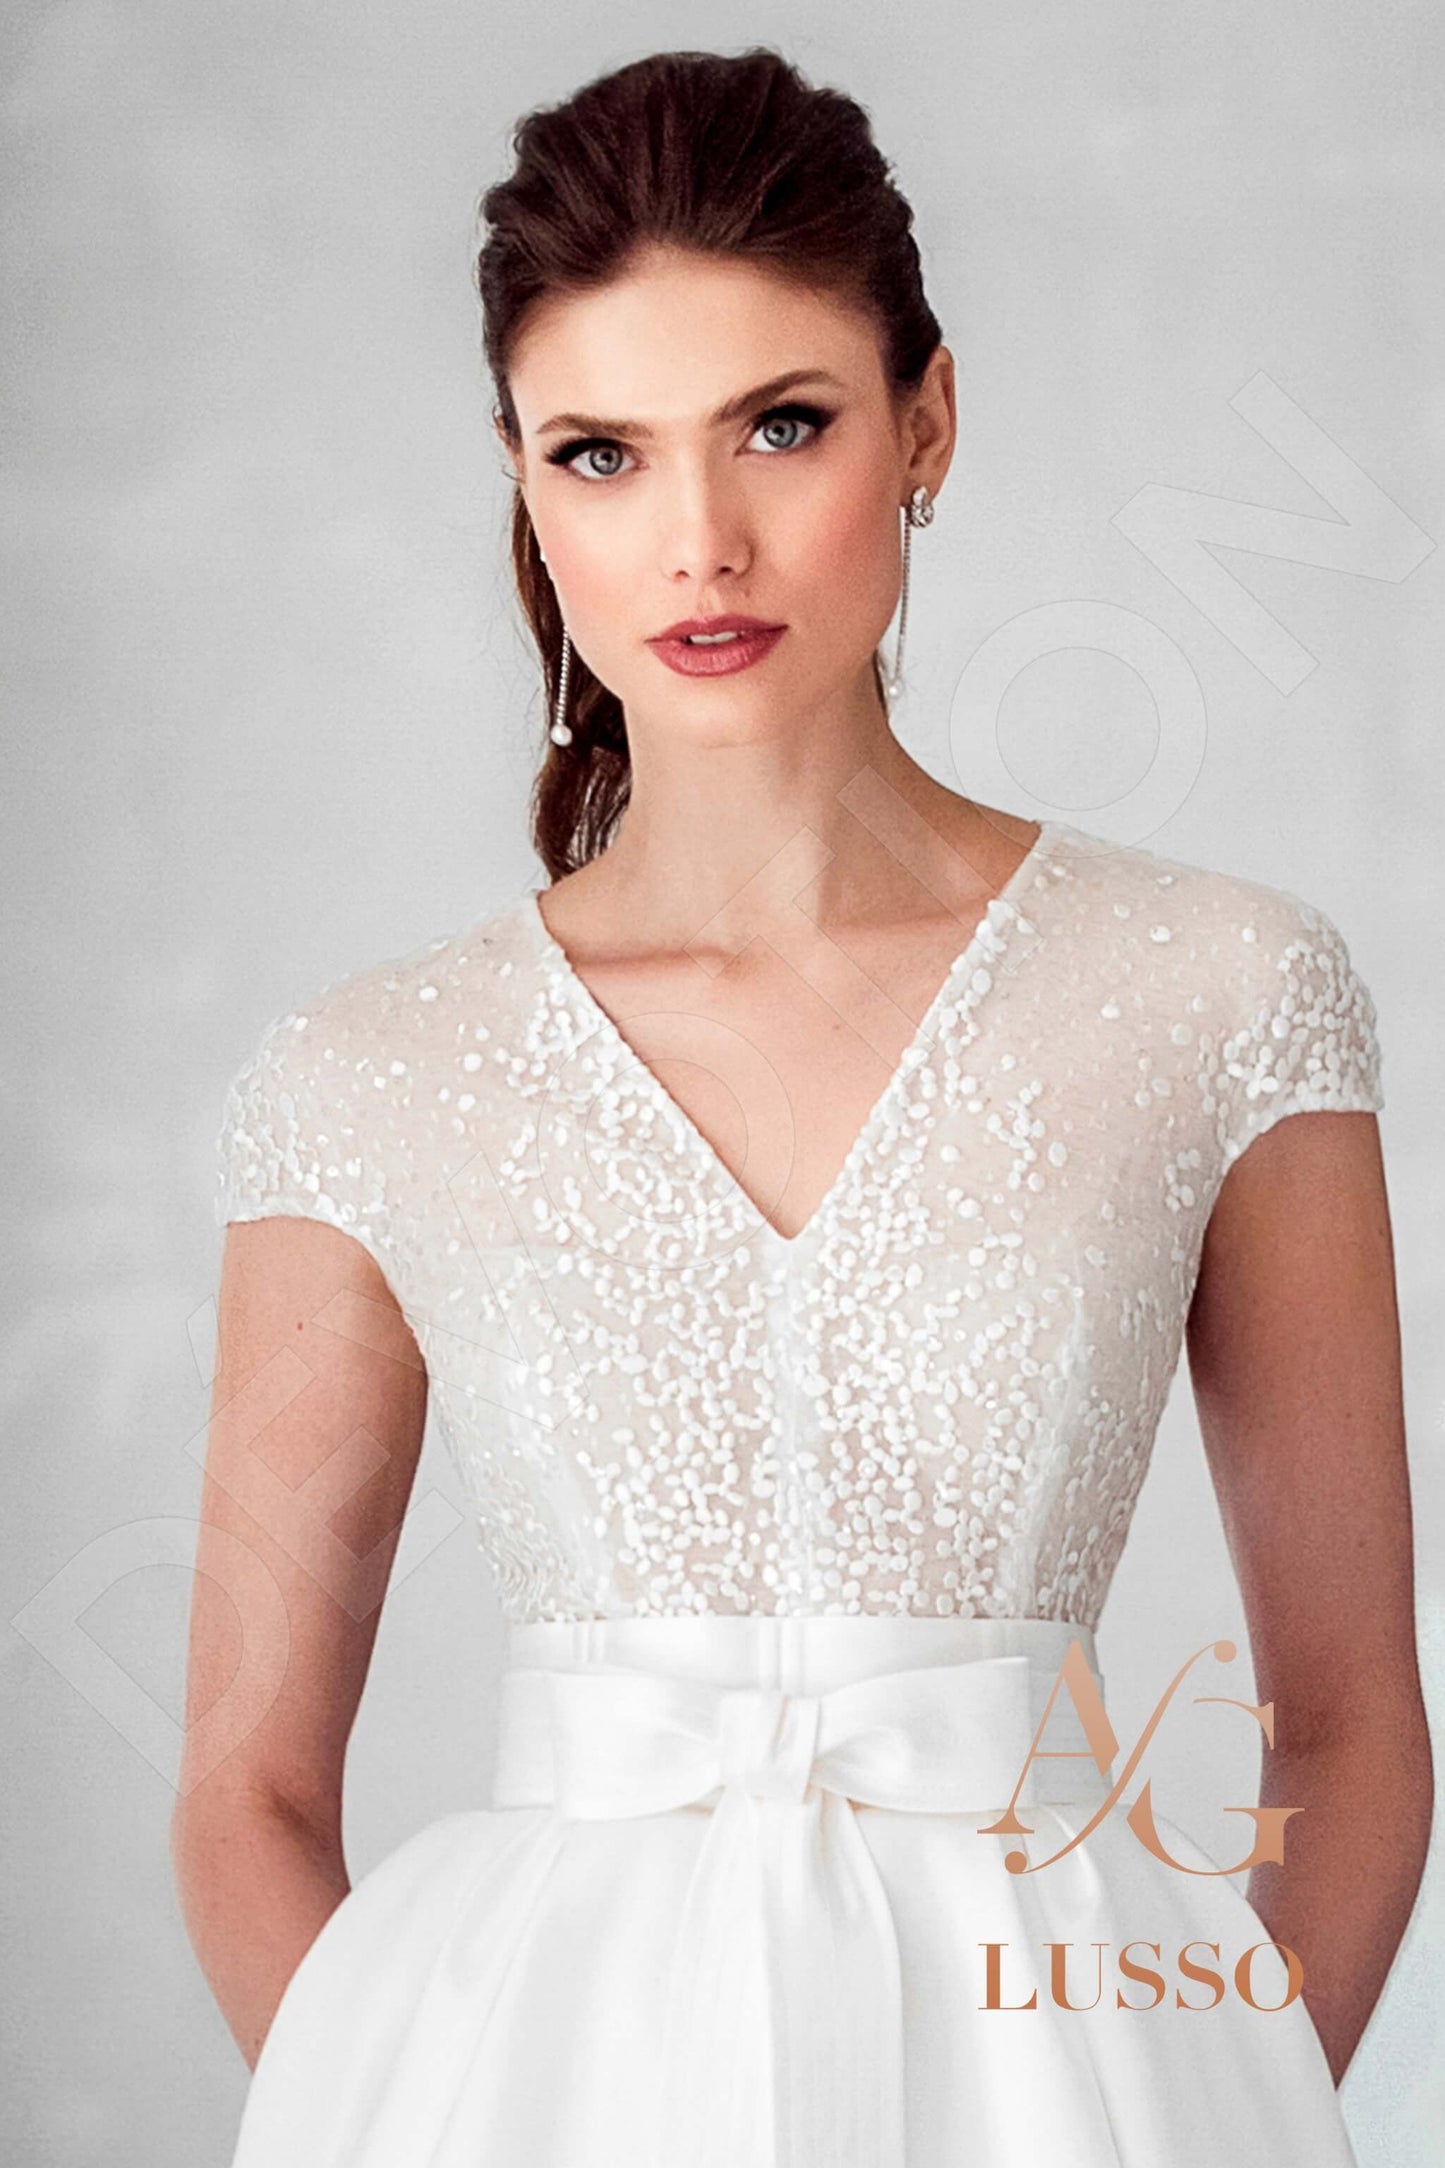 Chanellia Full back A-line Short/ Cap sleeve Wedding Dress 2